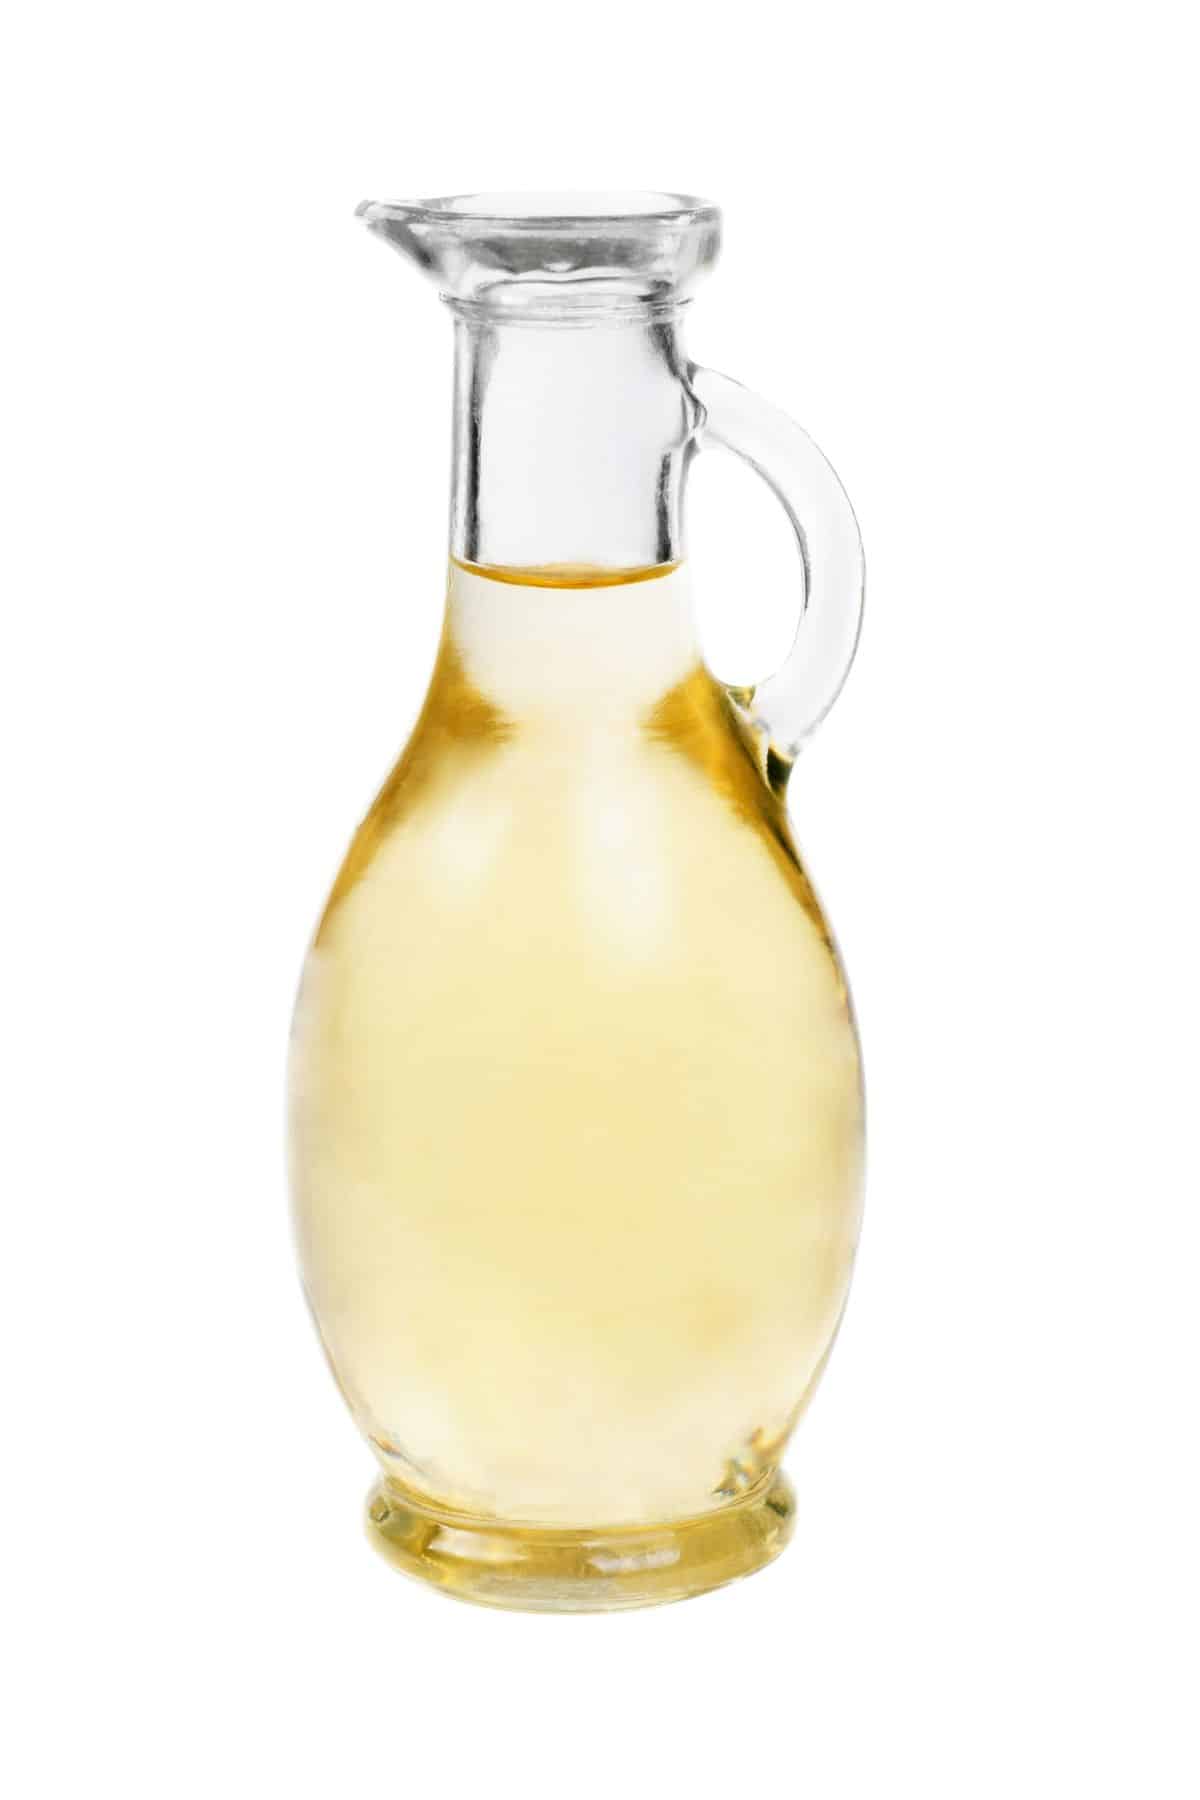 Jar of white wine vinegar on white background.